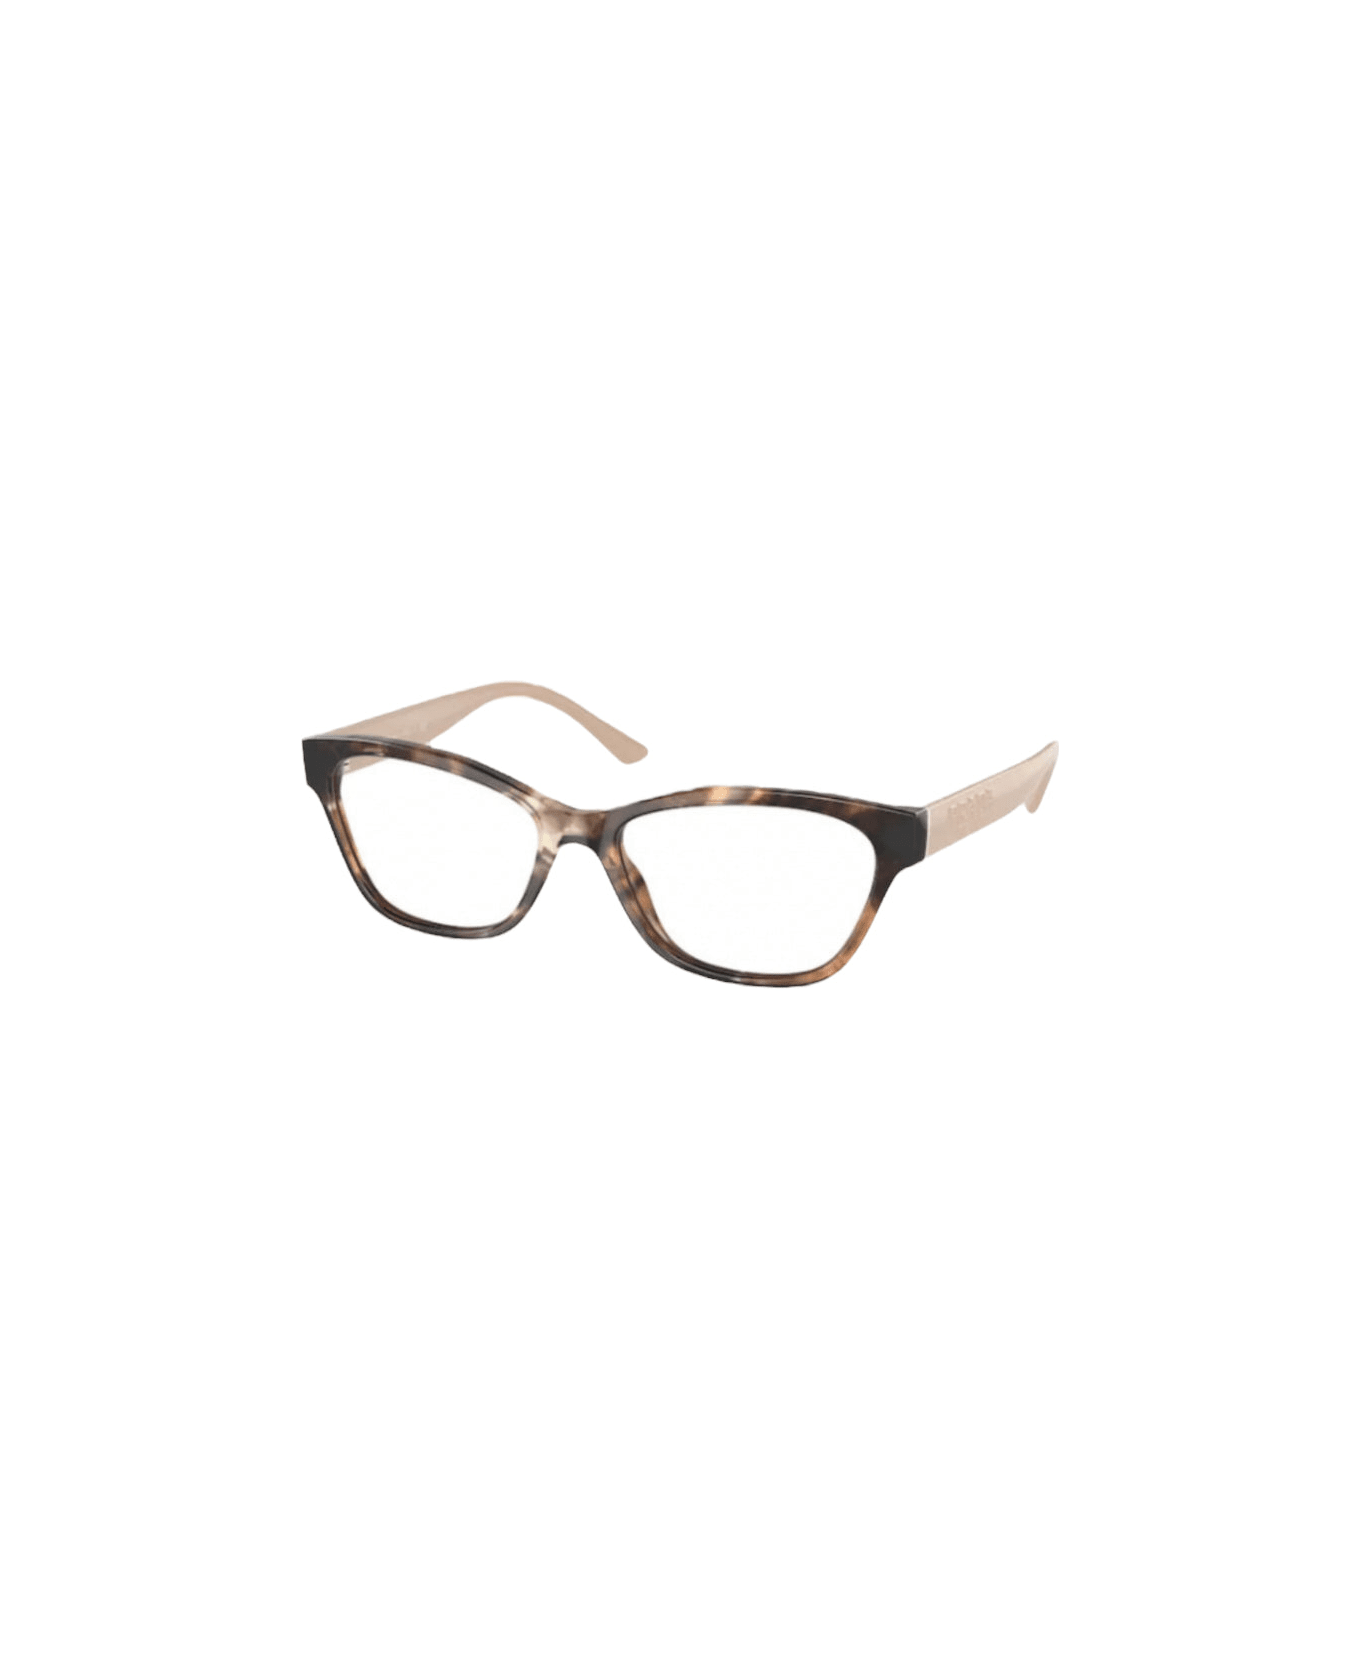 Prada Eyewear Opr 03w Glasses